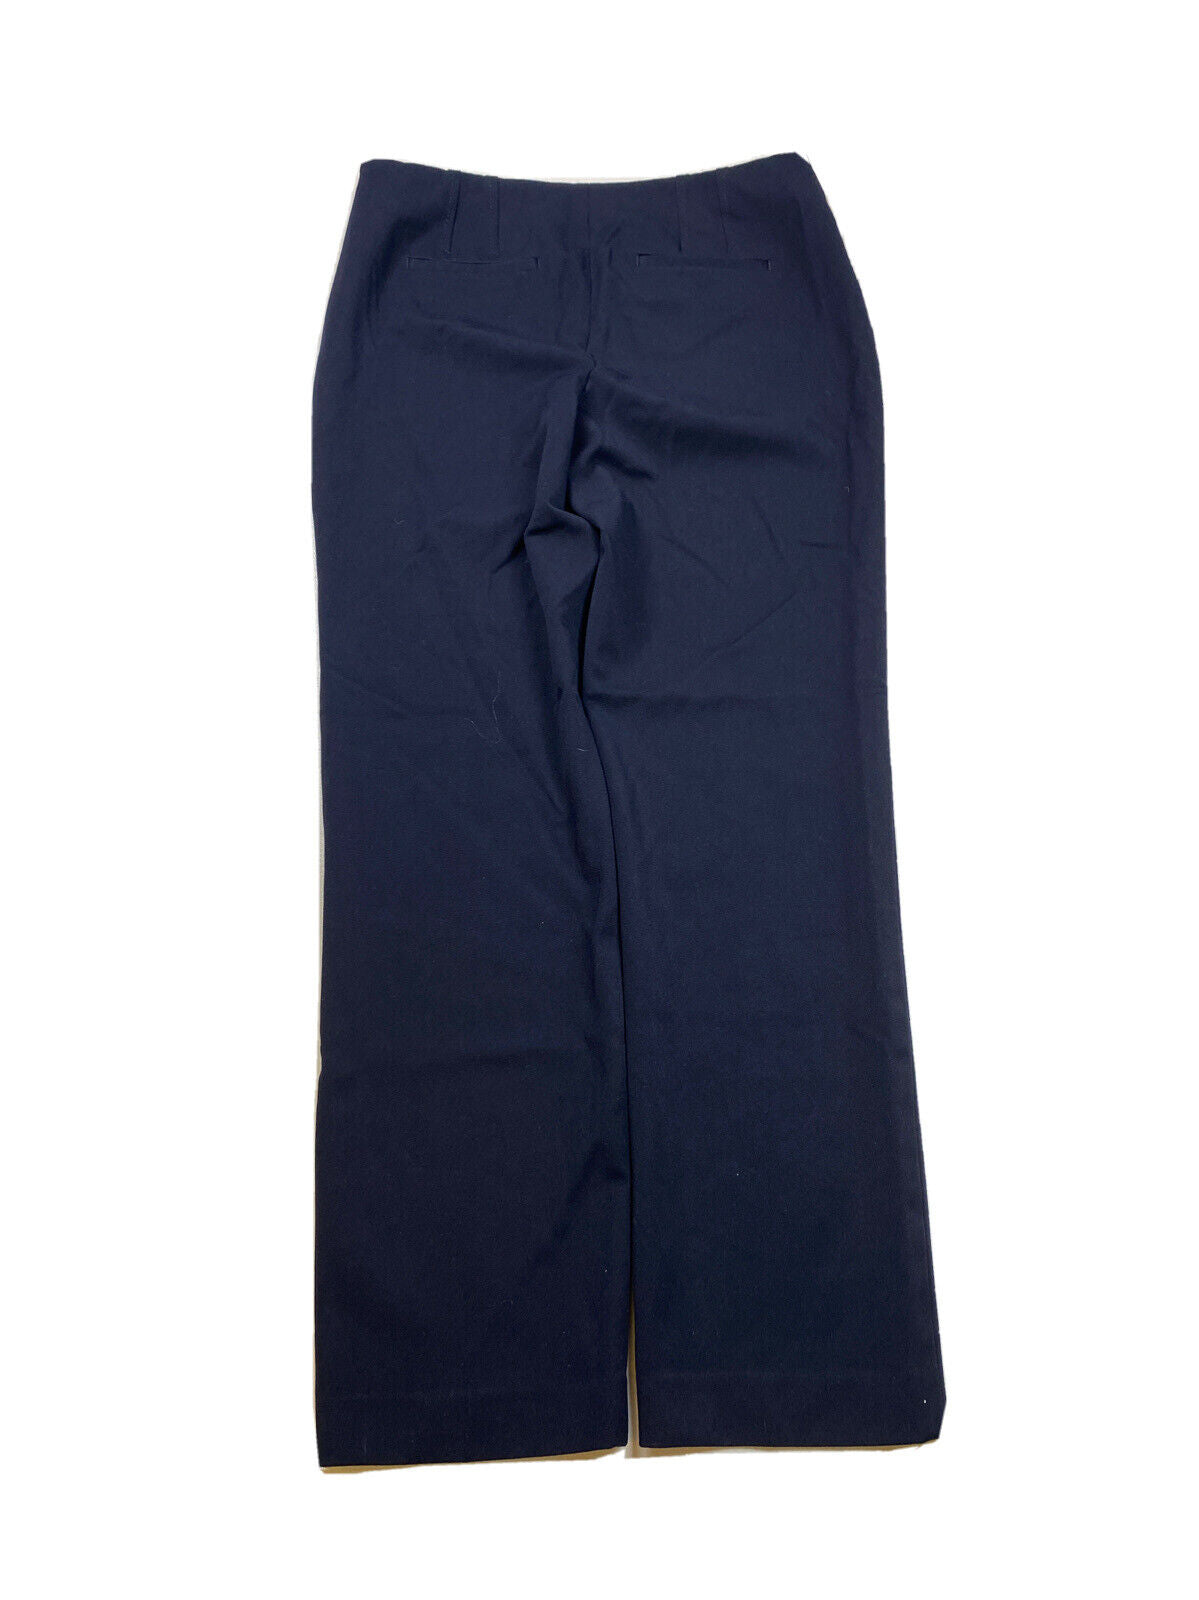 Talbots Women's Blue Side Zip Bi-Stretch Straight Dress Pants - 8 Petite